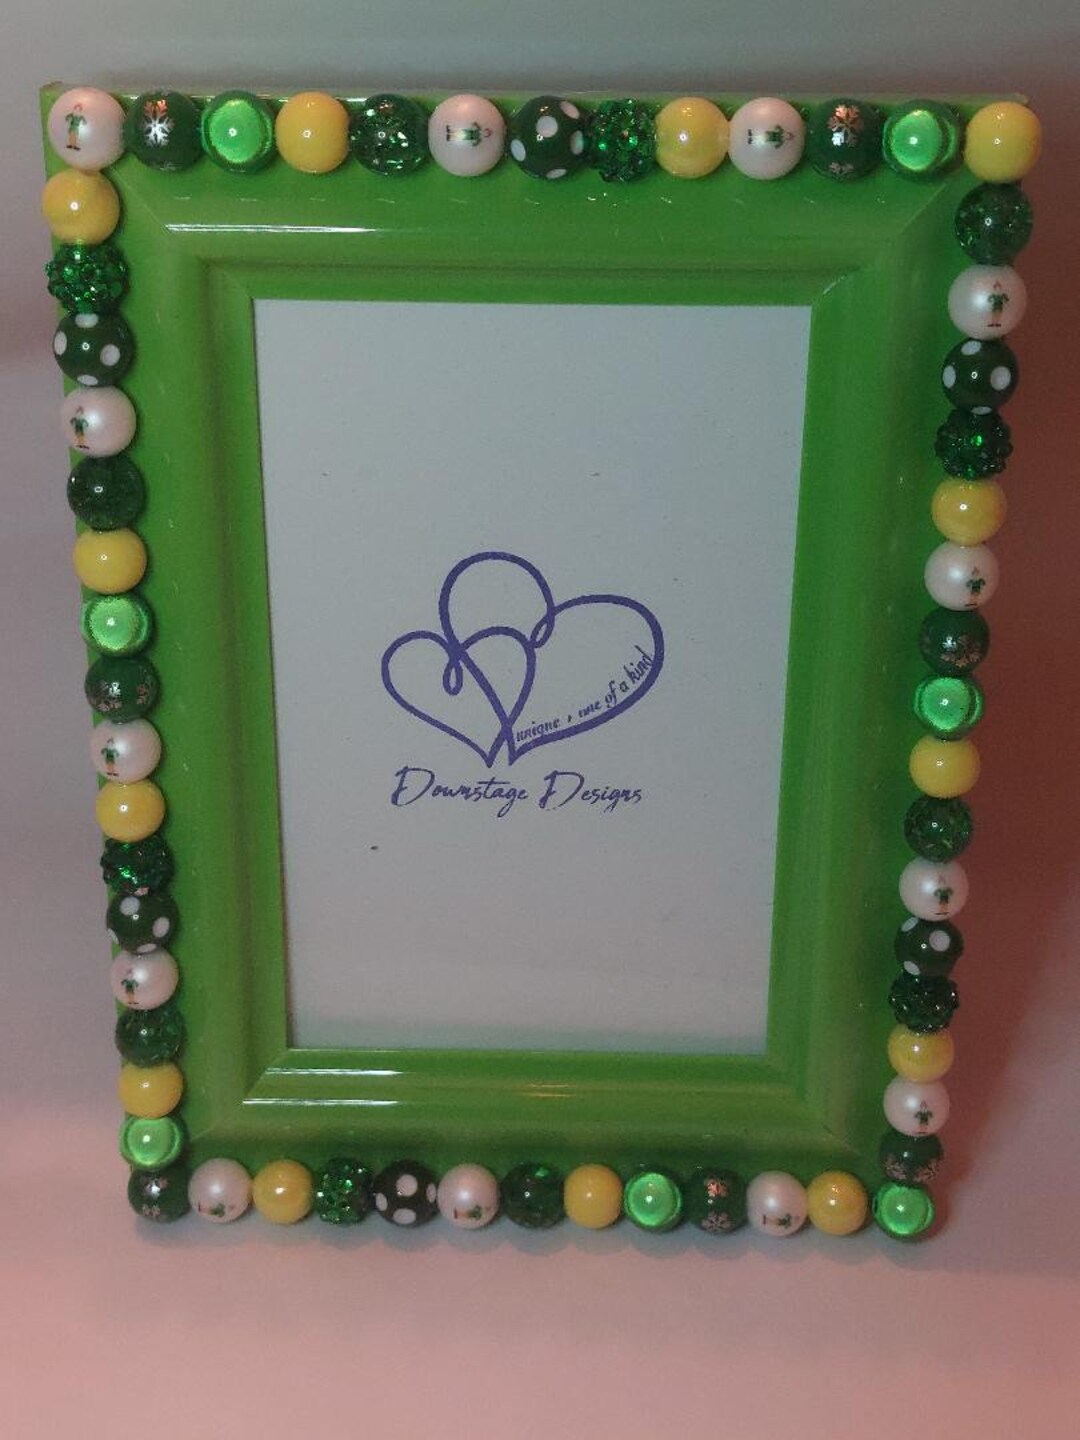 Frames, whimsical Christmas Small Bead Design on a 4x6 Green Frame